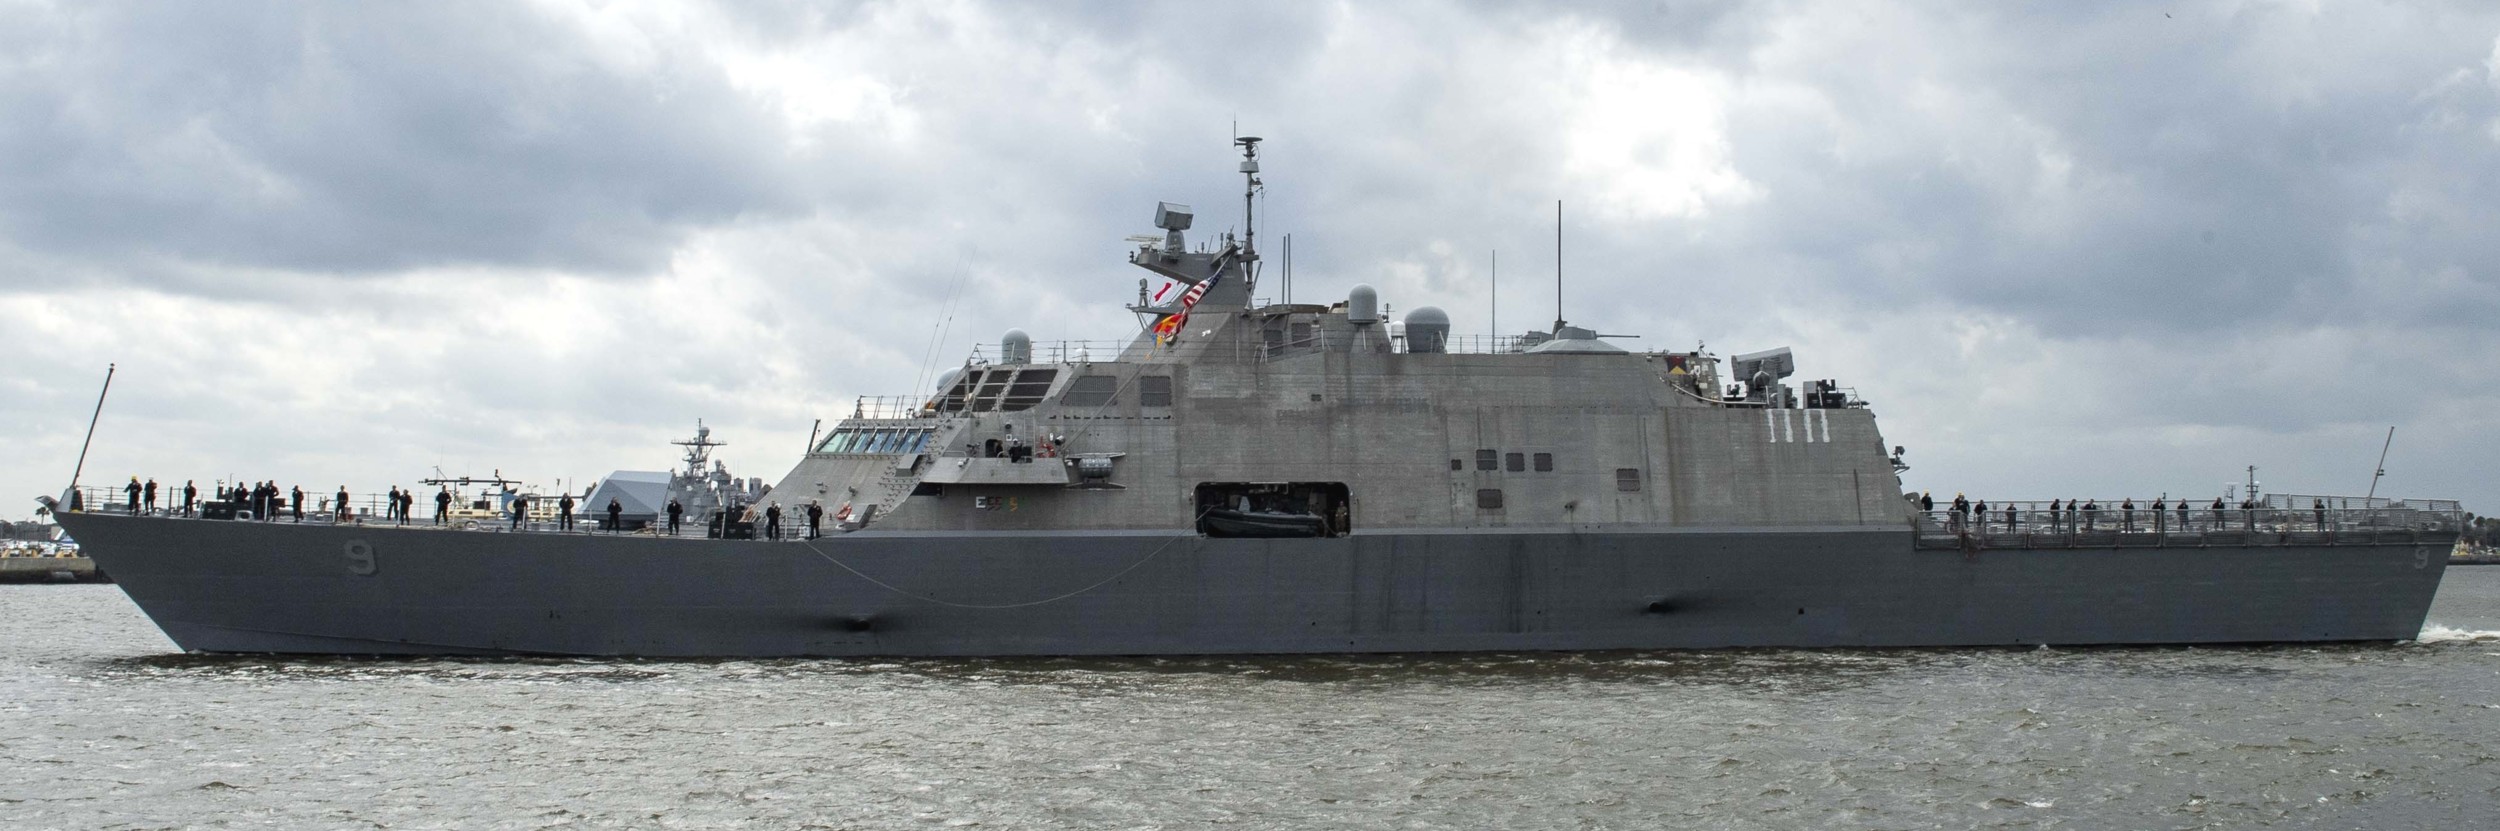 lcs-9 uss little rock freedom class littoral combat ship us navy 43 departing mayport florida